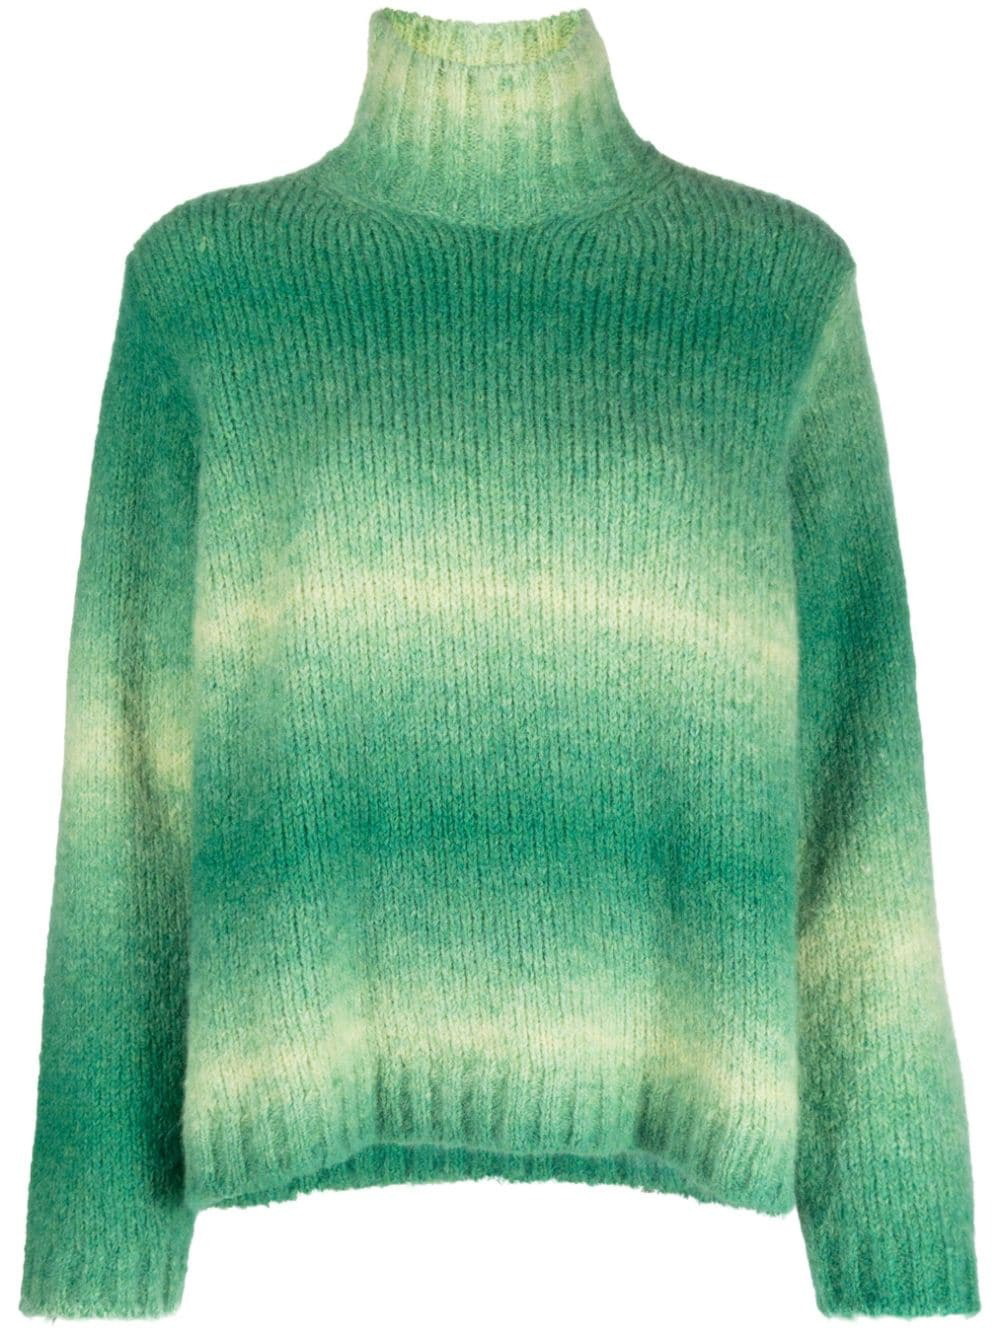 Photo: WOOLRICH - Gradient Wool Blend Turtleneck Sweater